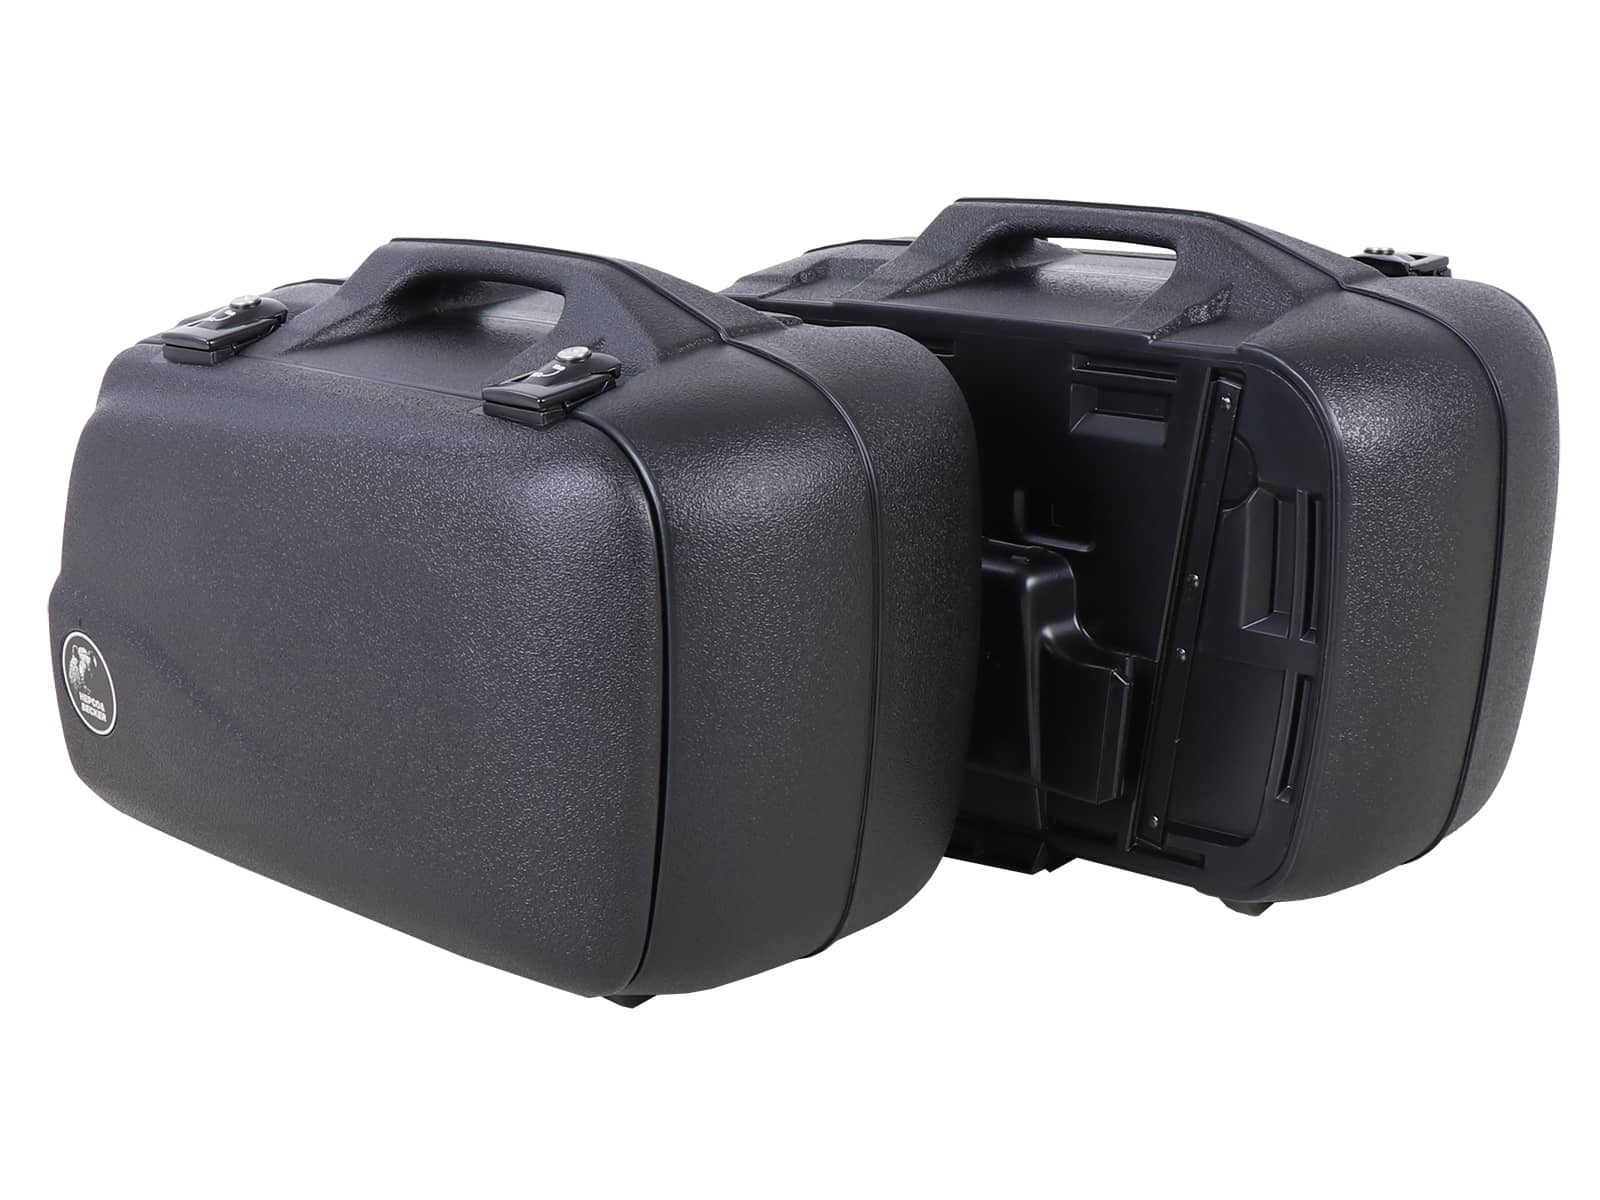 Details about   Hepco Becker Junior 40 Top Case Luggage Case 